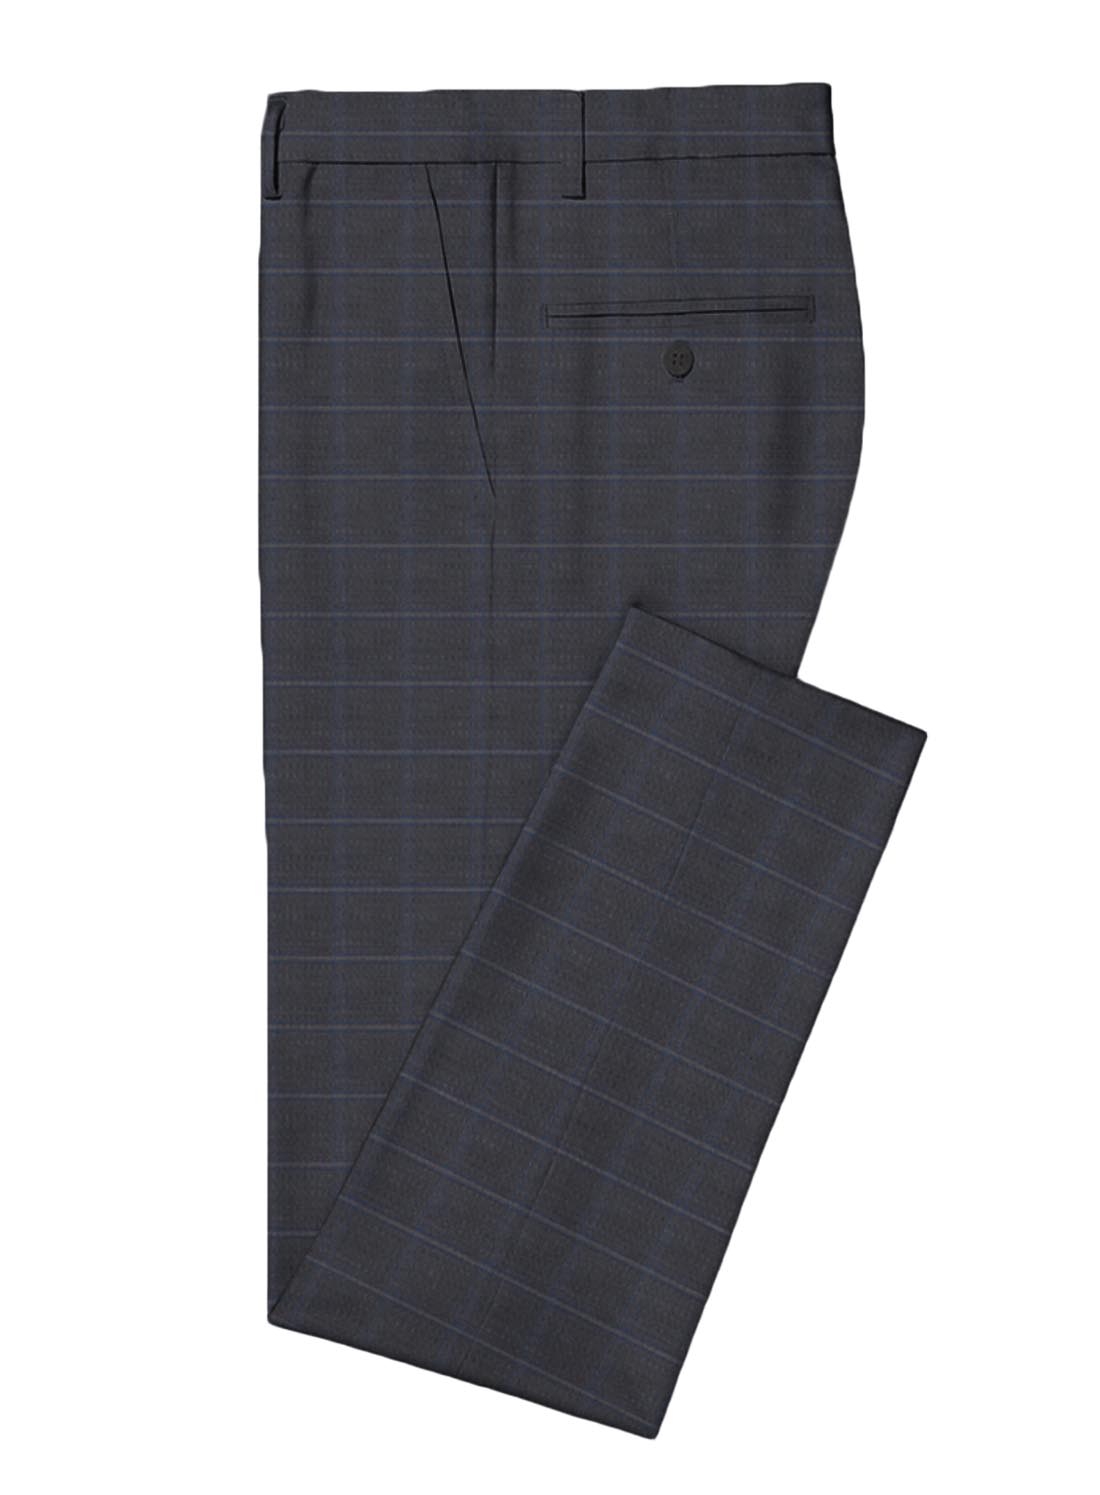 Buy Grey Trousers & Pants for Men by J. Hampstead Online | Ajio.com